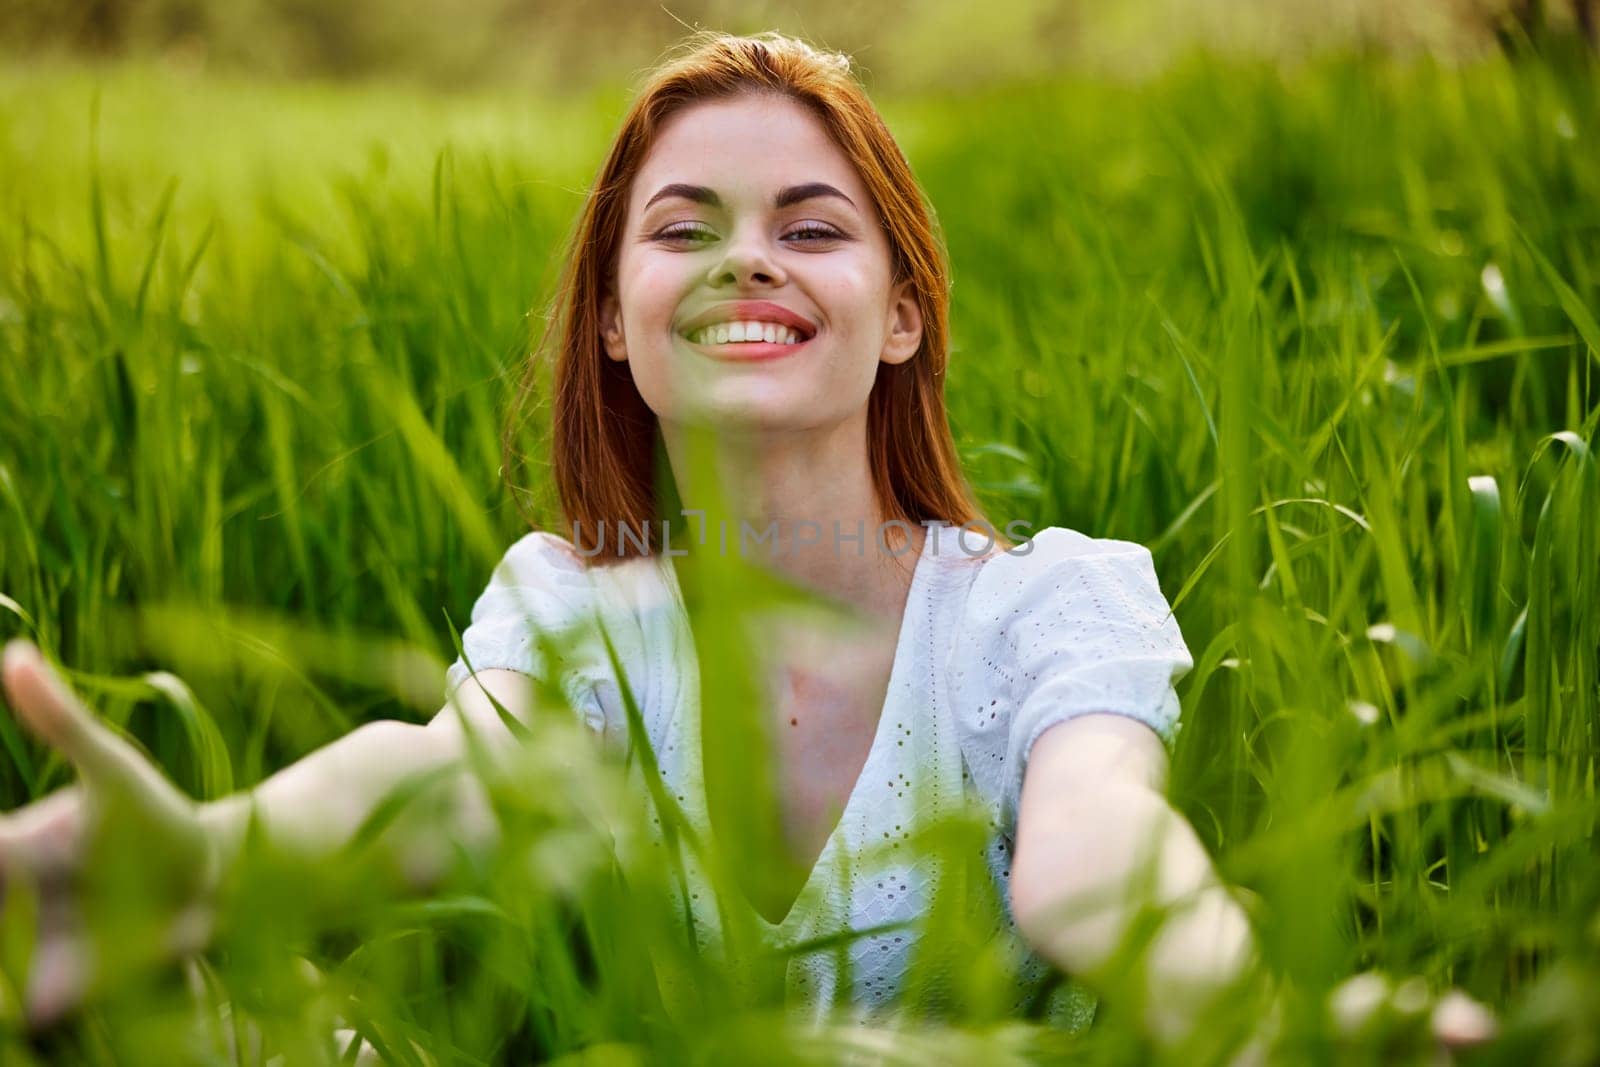 cheerful woman sitting in grass looking at camera smiling at camera by Vichizh